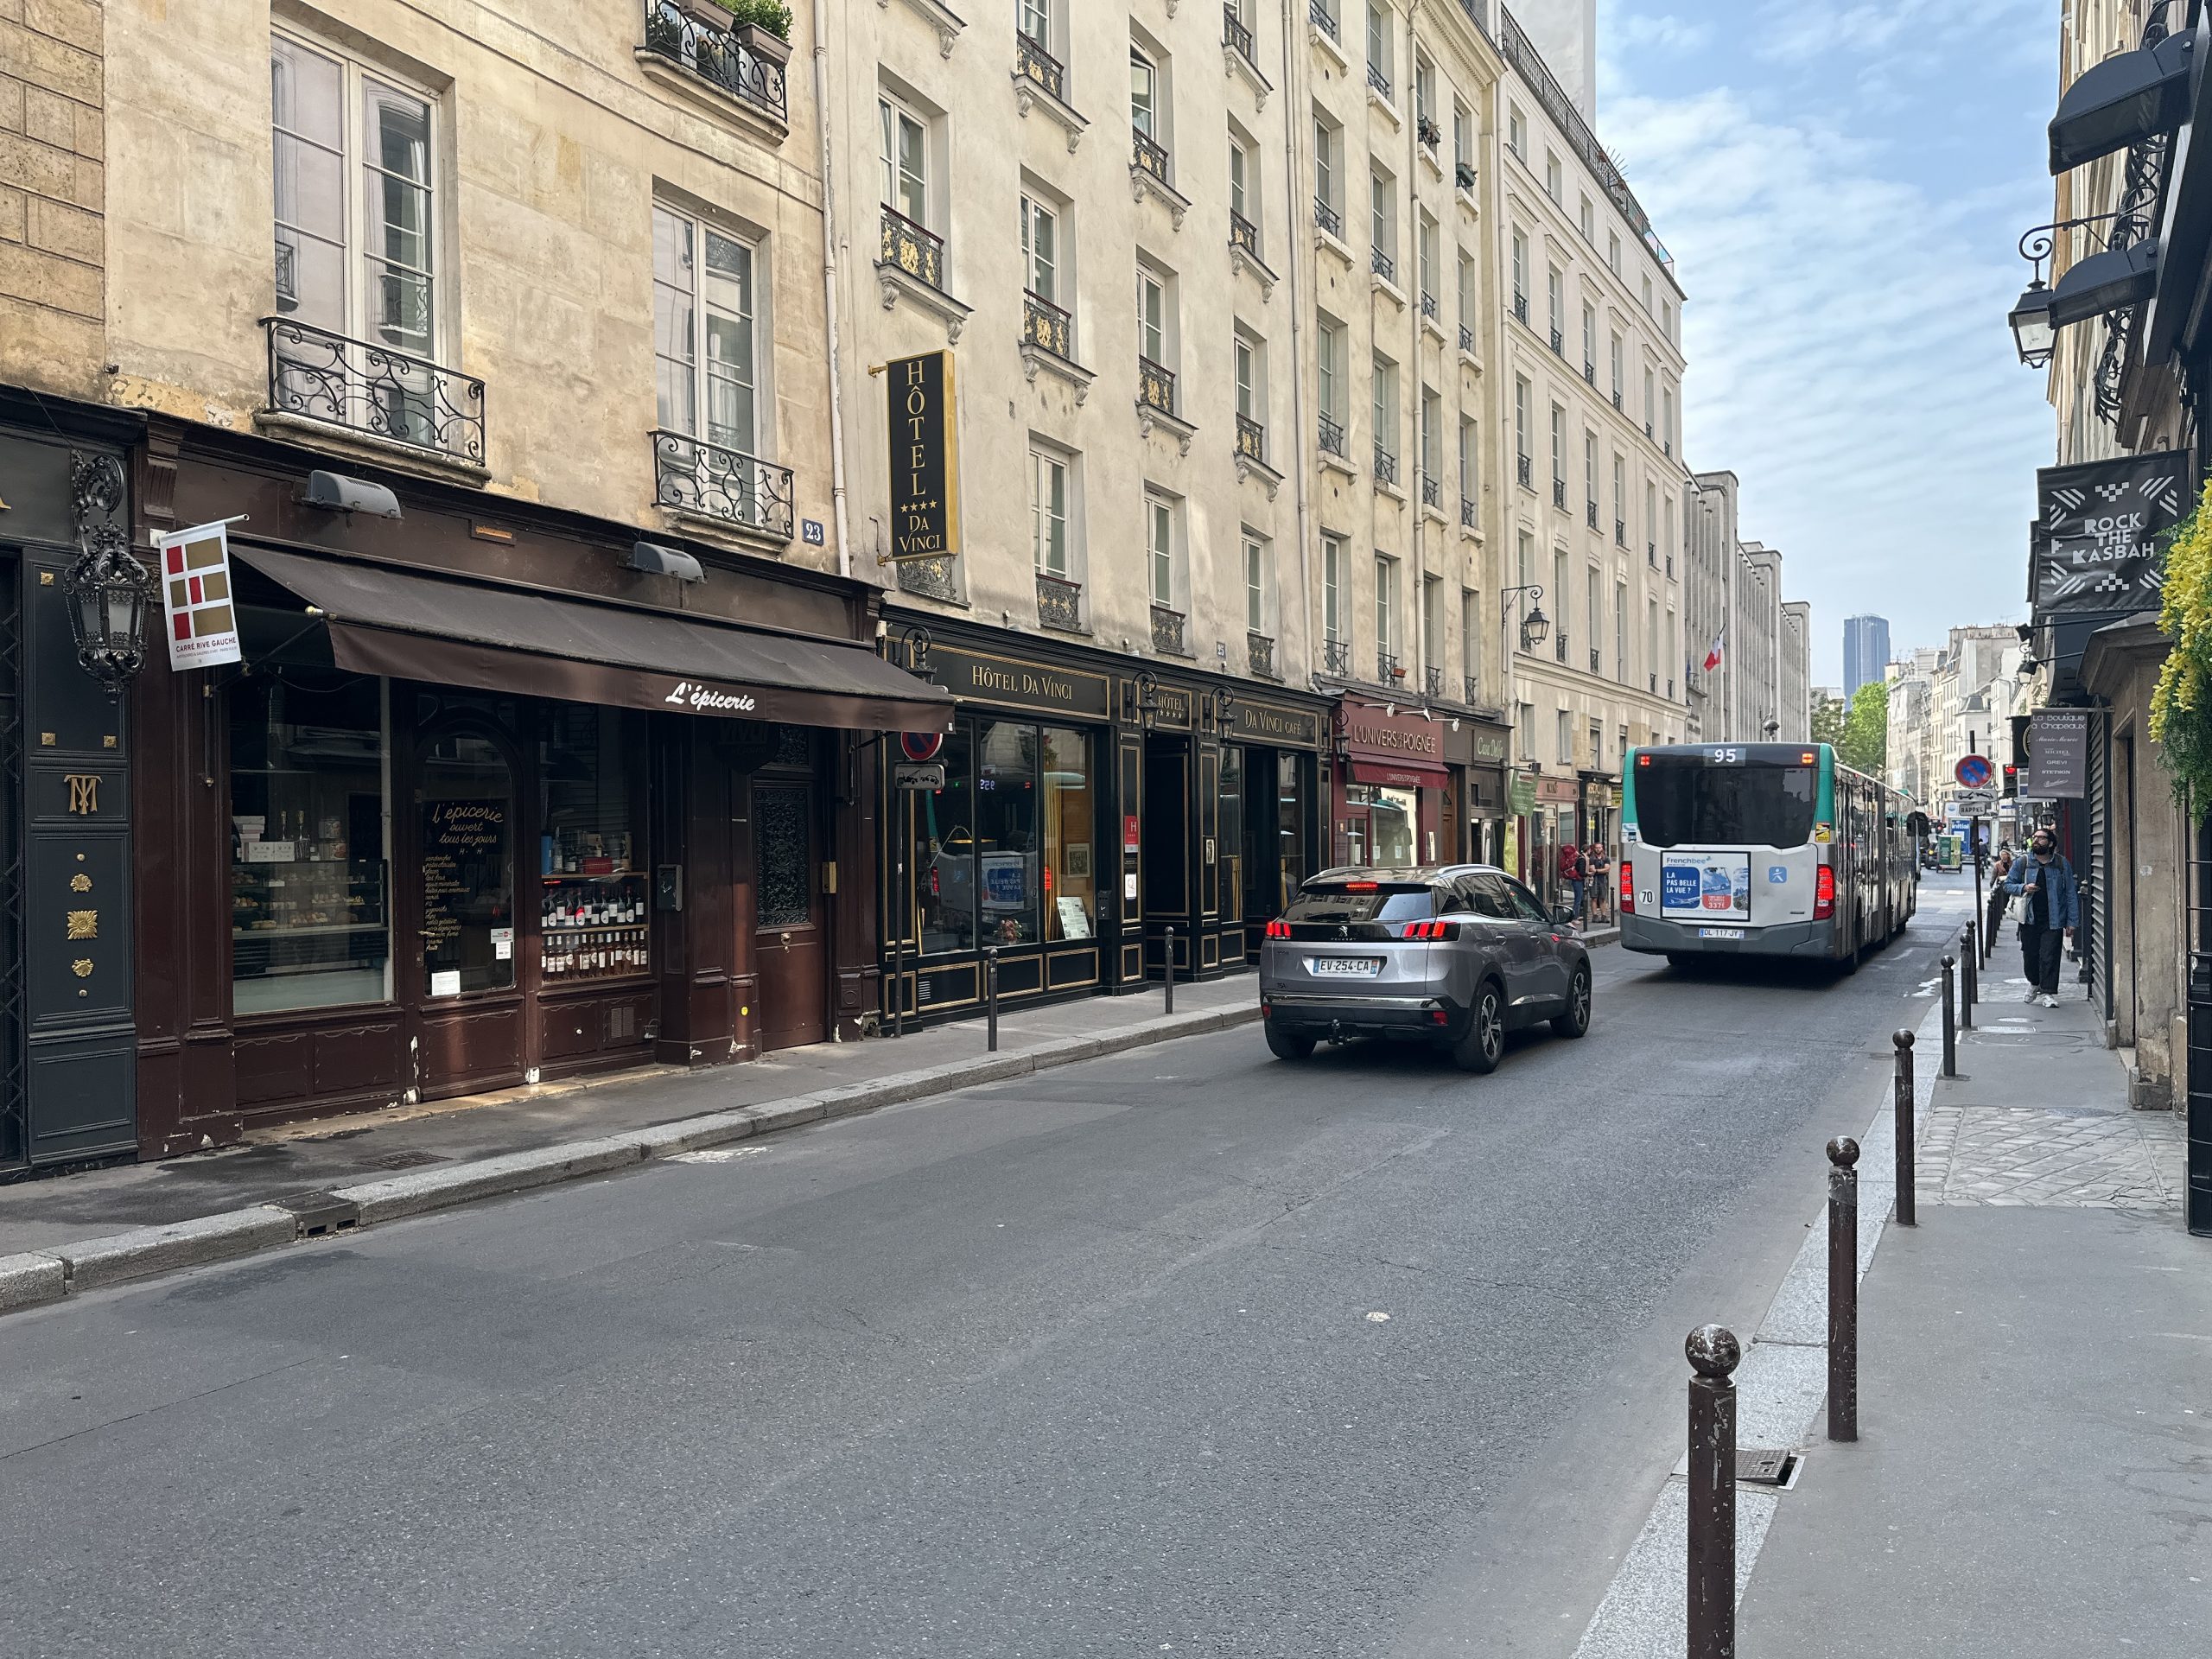 Strasse in Paris